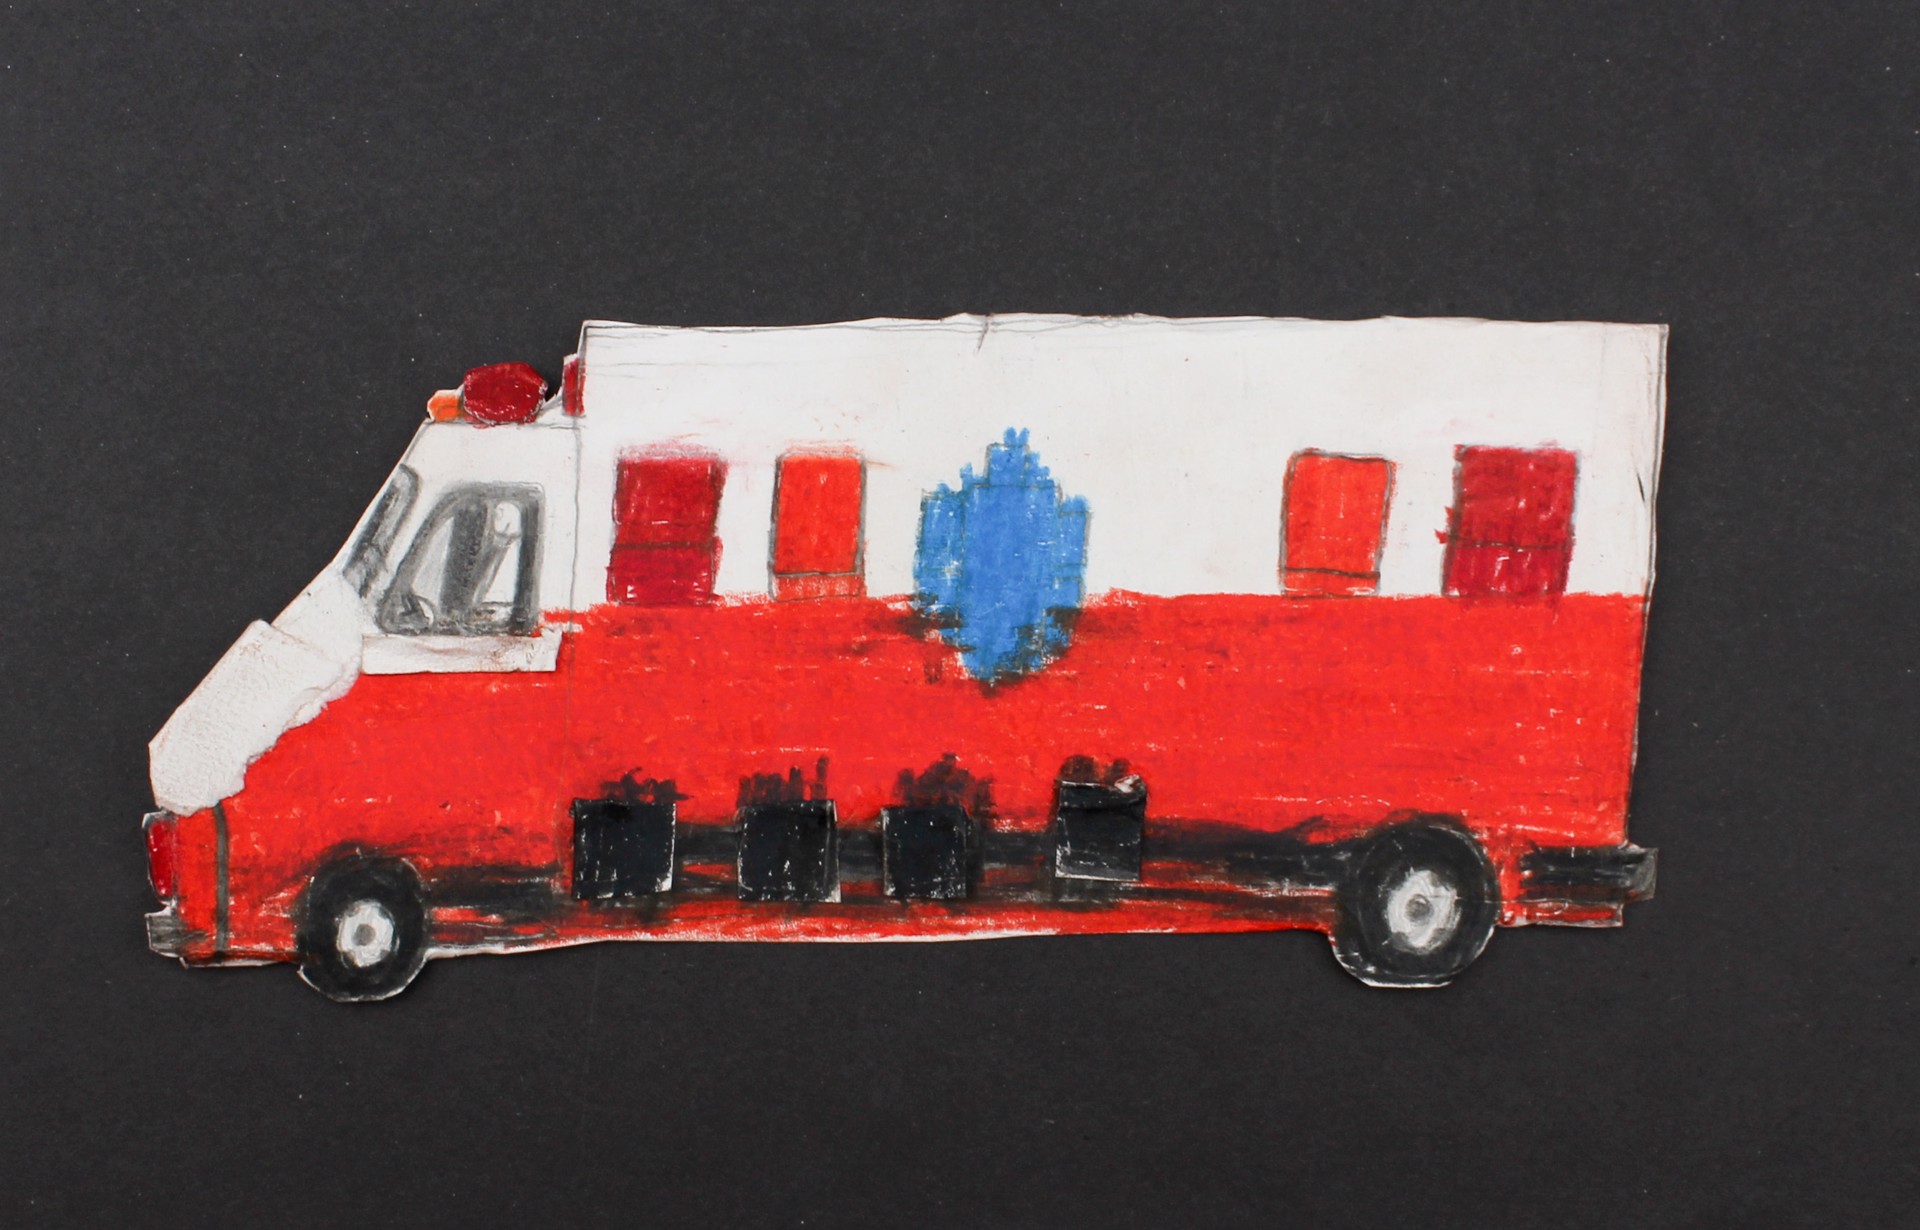 Ambulance by Michael Haynes